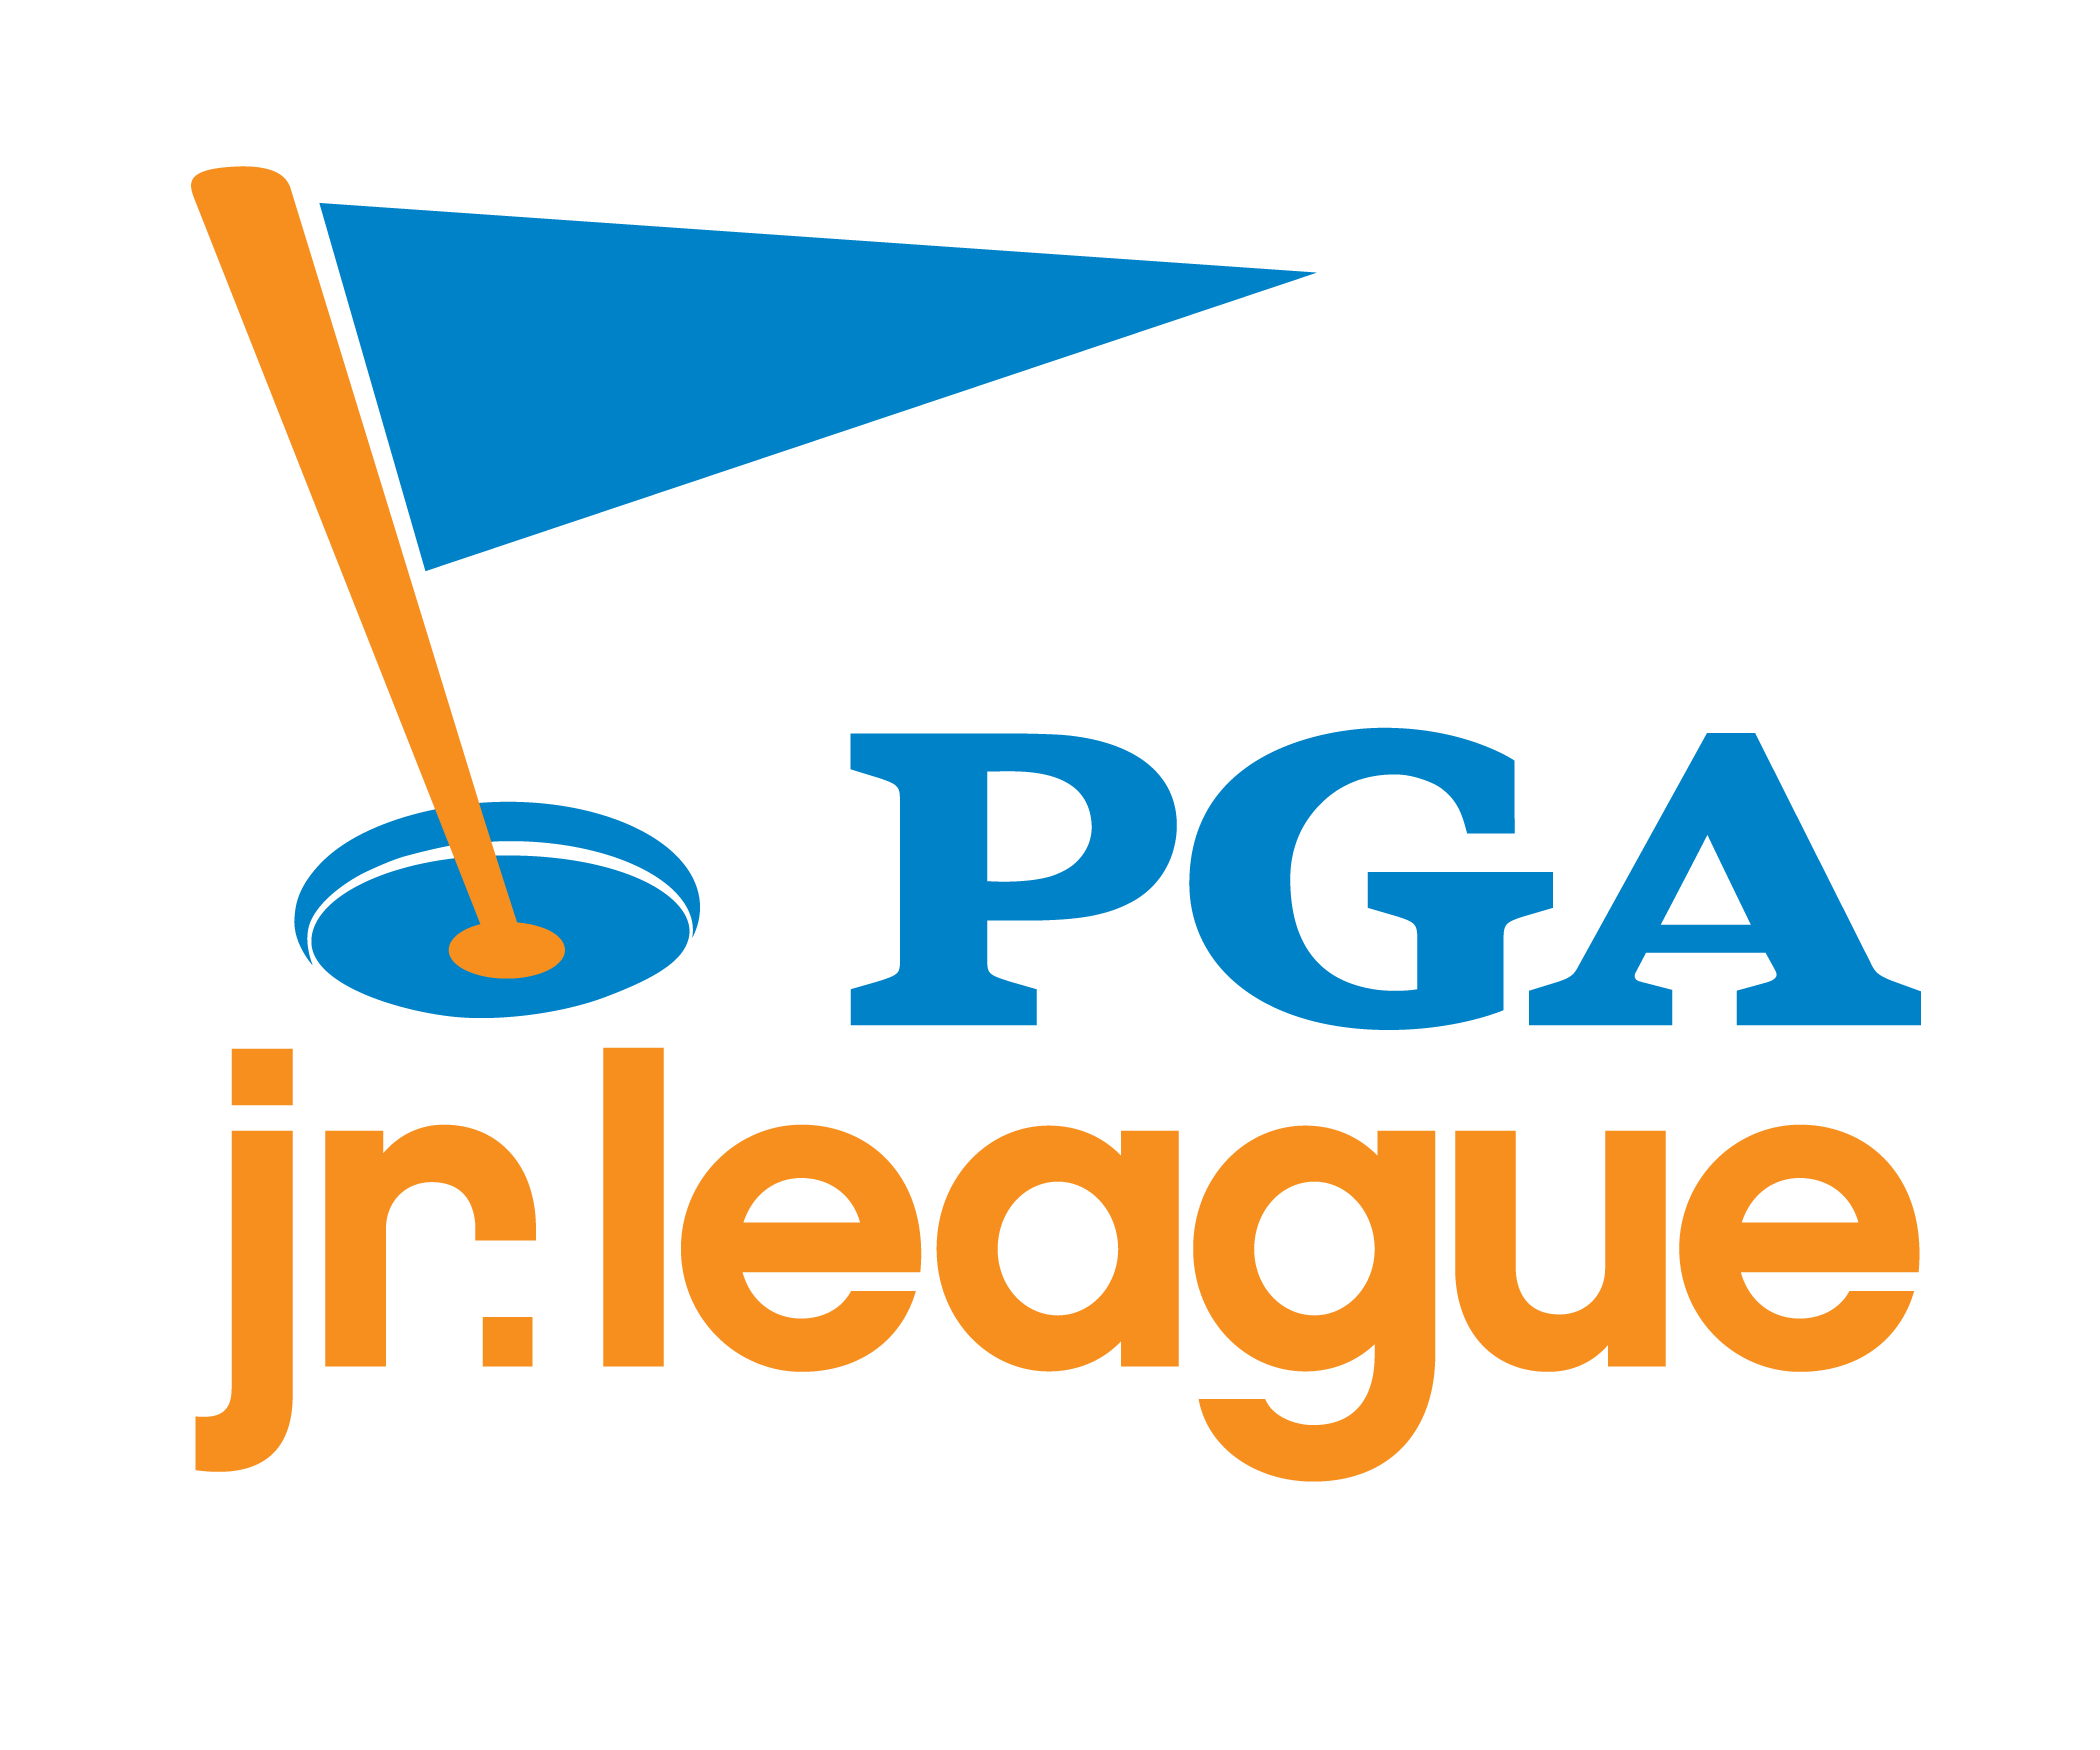 PGA JR League logo